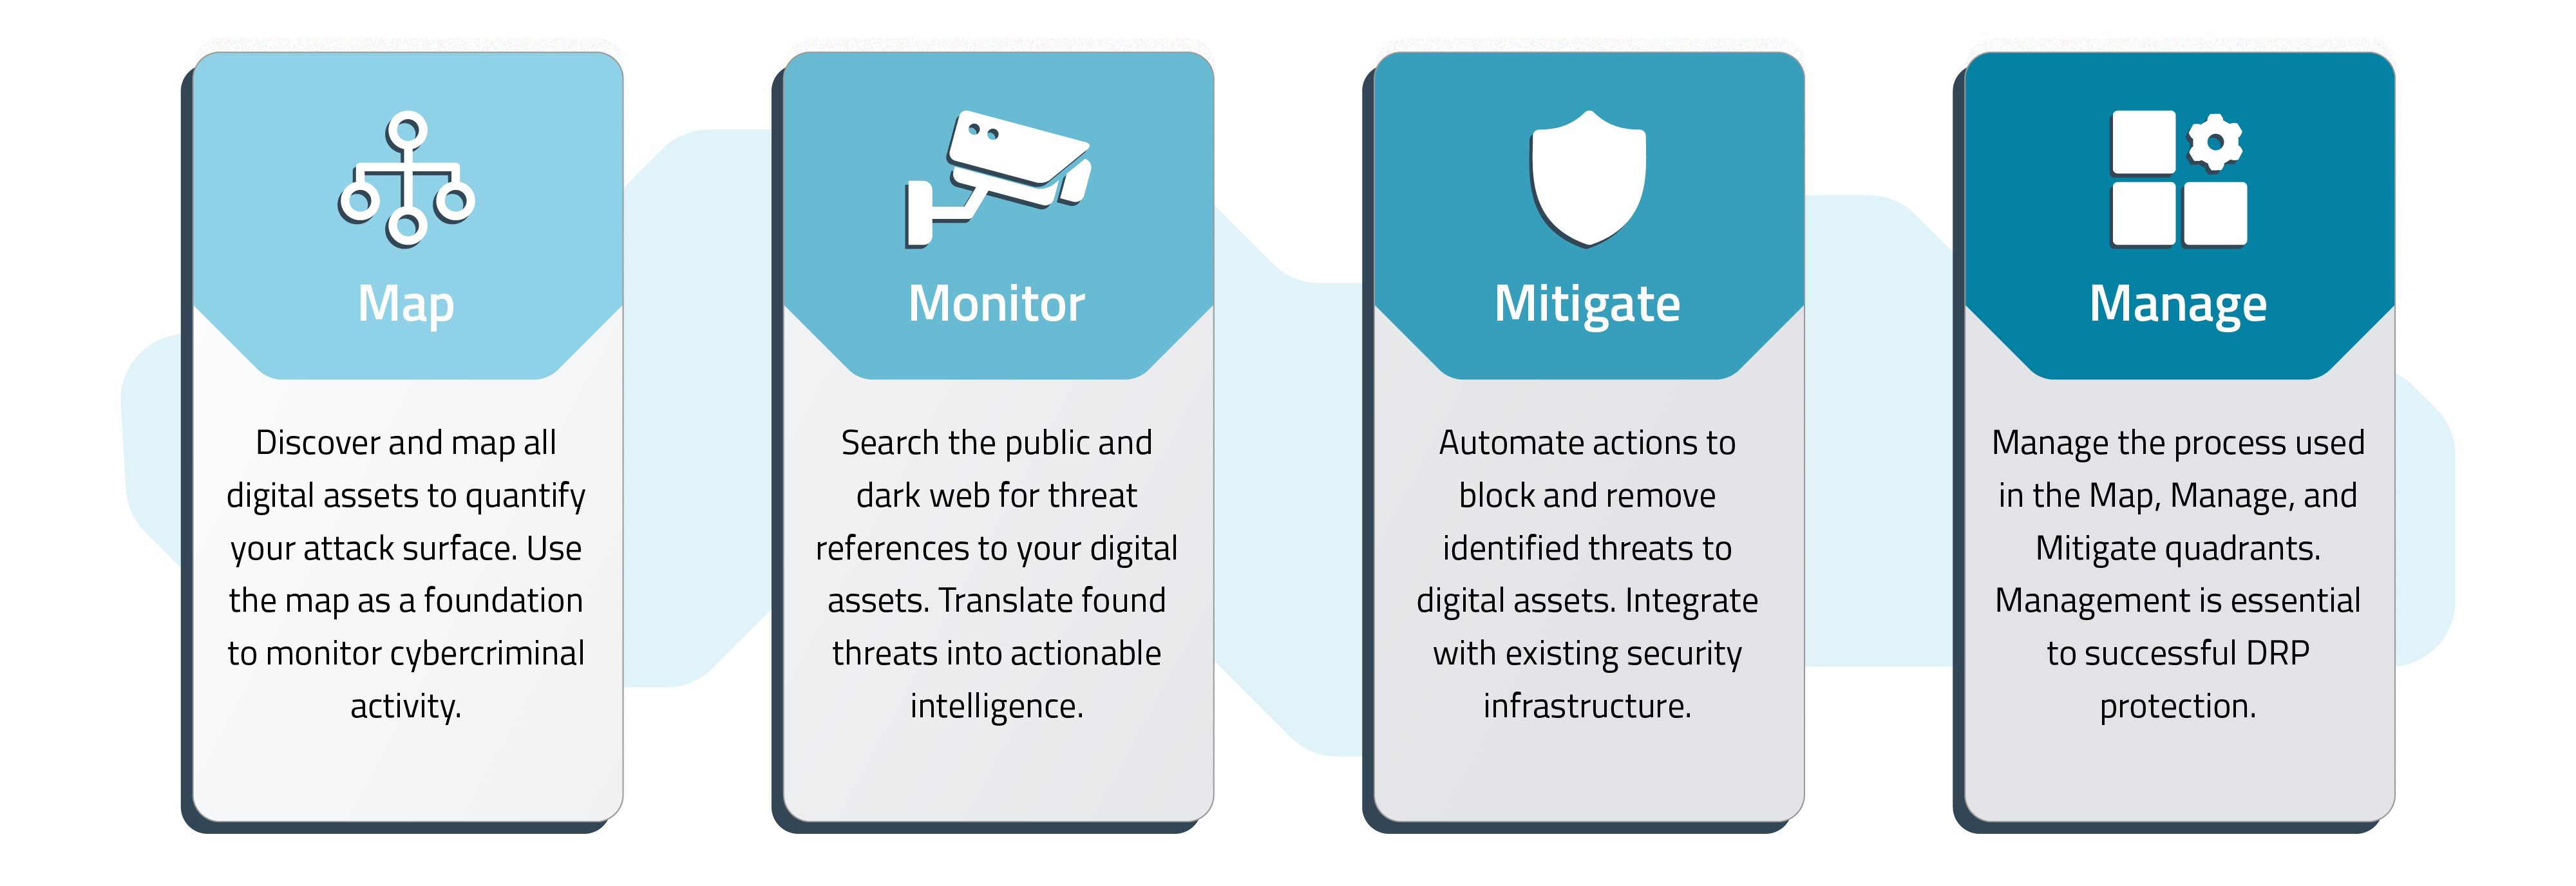 Four Quadrants of Digital Risk Protection (DRP)